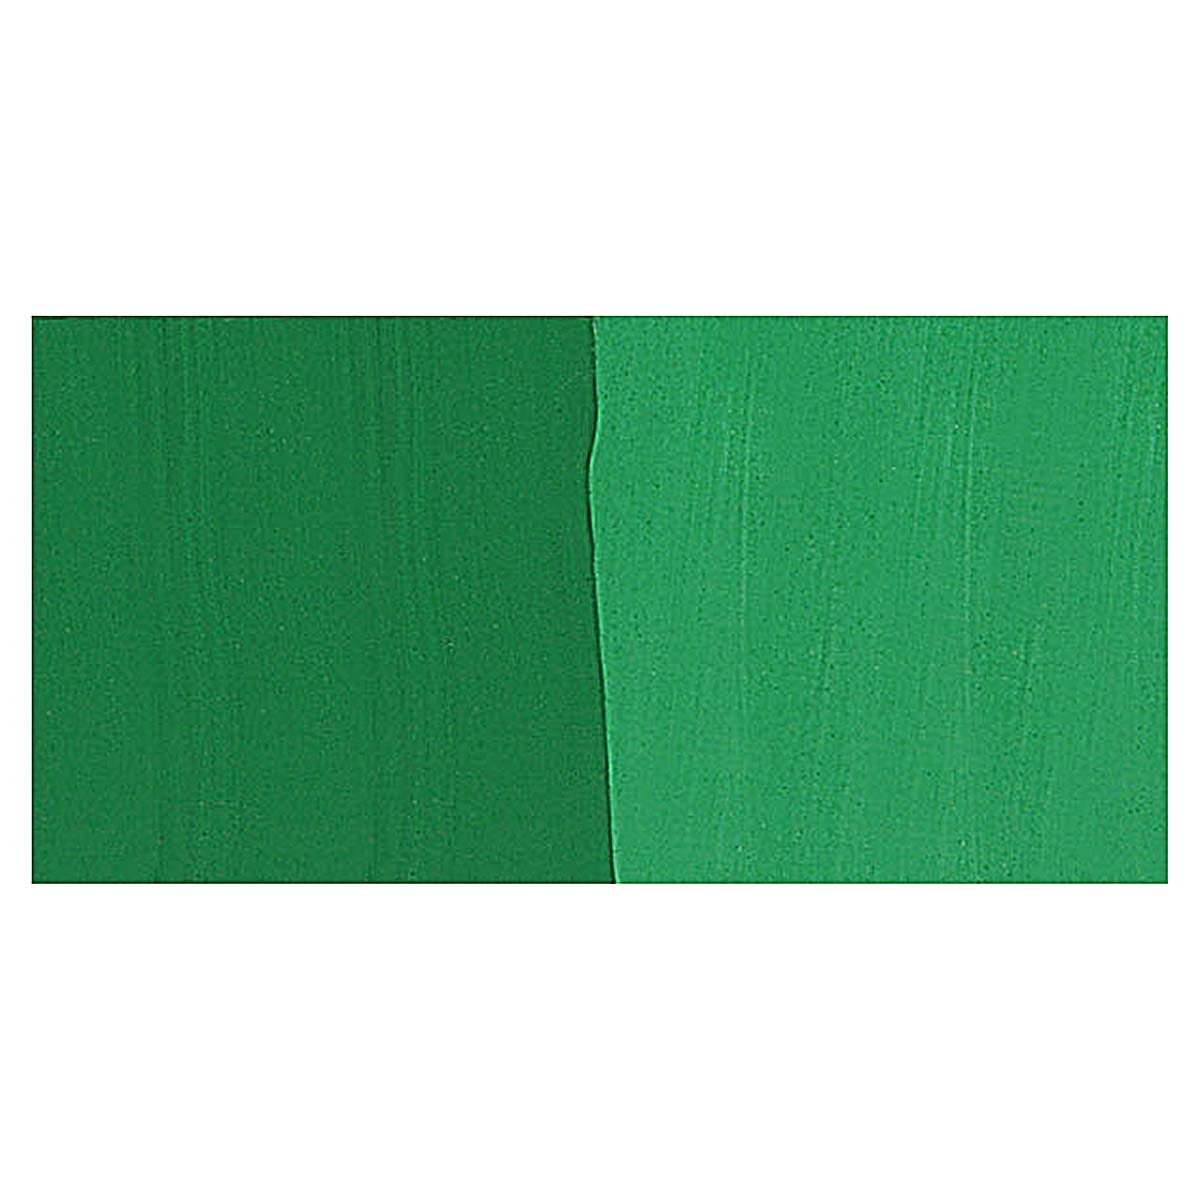 Winsor & Newton Designers' Gouache Colour 14ml S2 - Permanent Green Deep